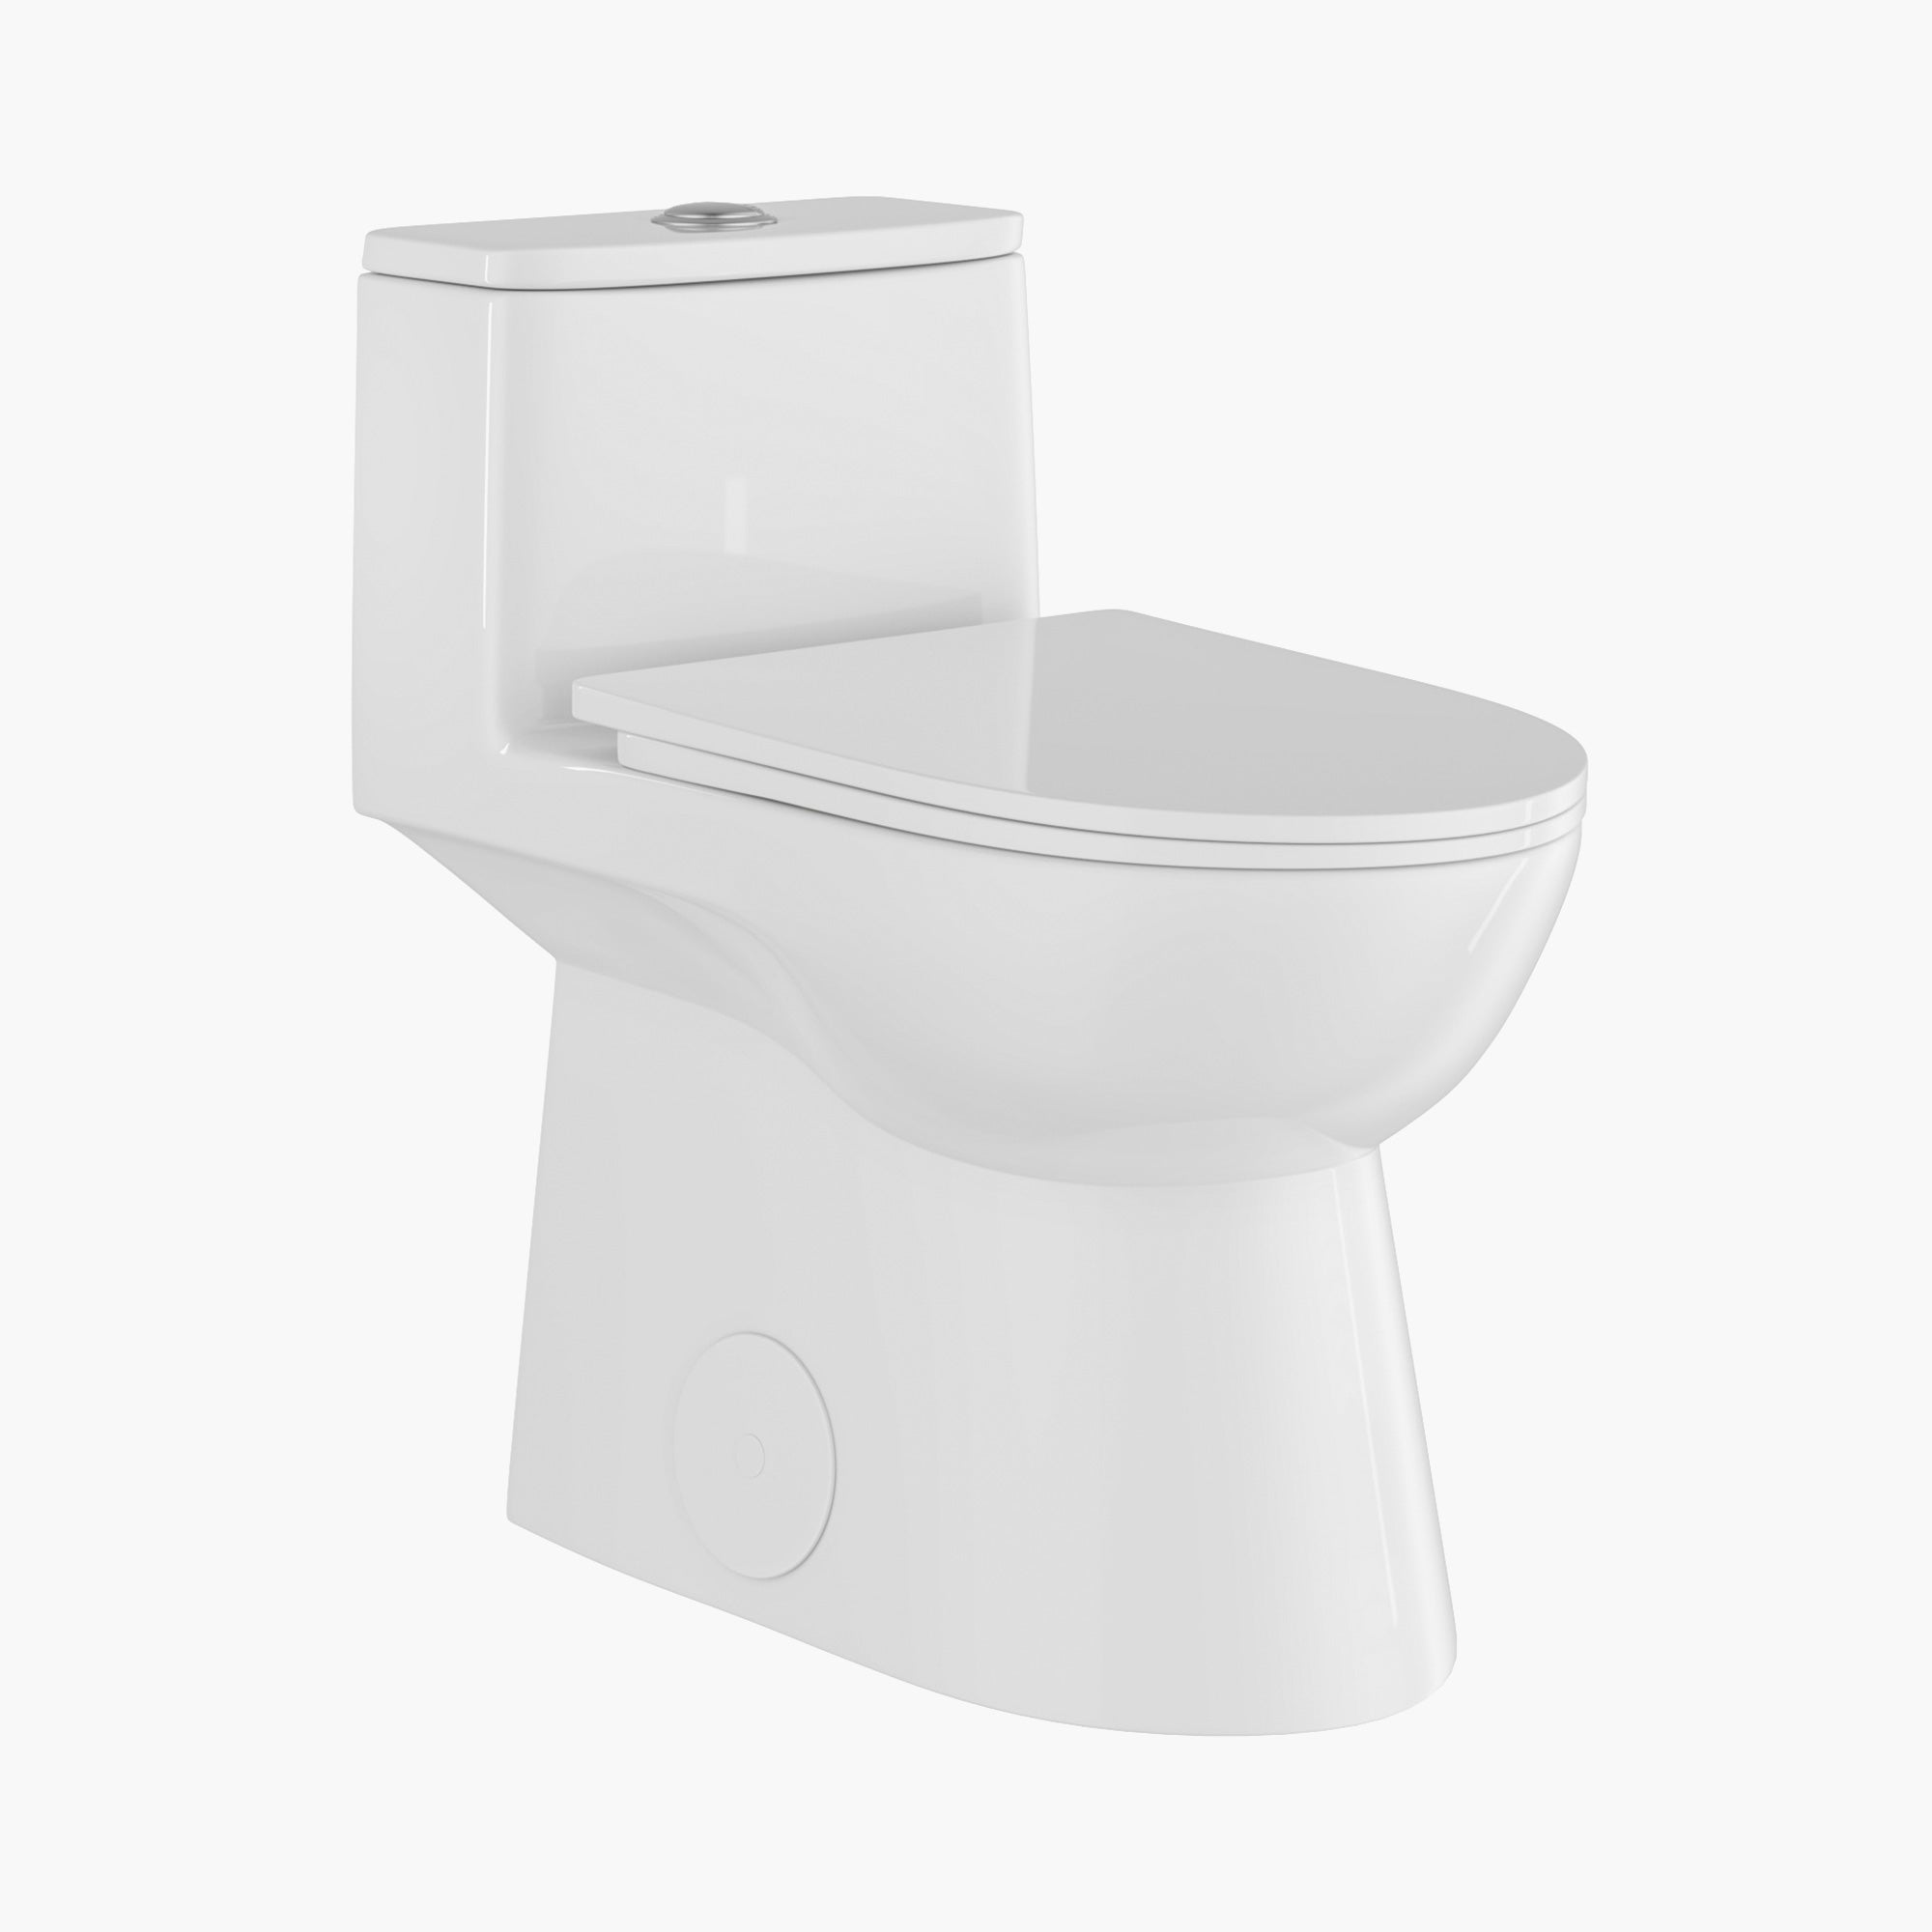 HOROW Best Dual Flush Toilet Modern Elongated Raised Toilet Seat Model T0334W